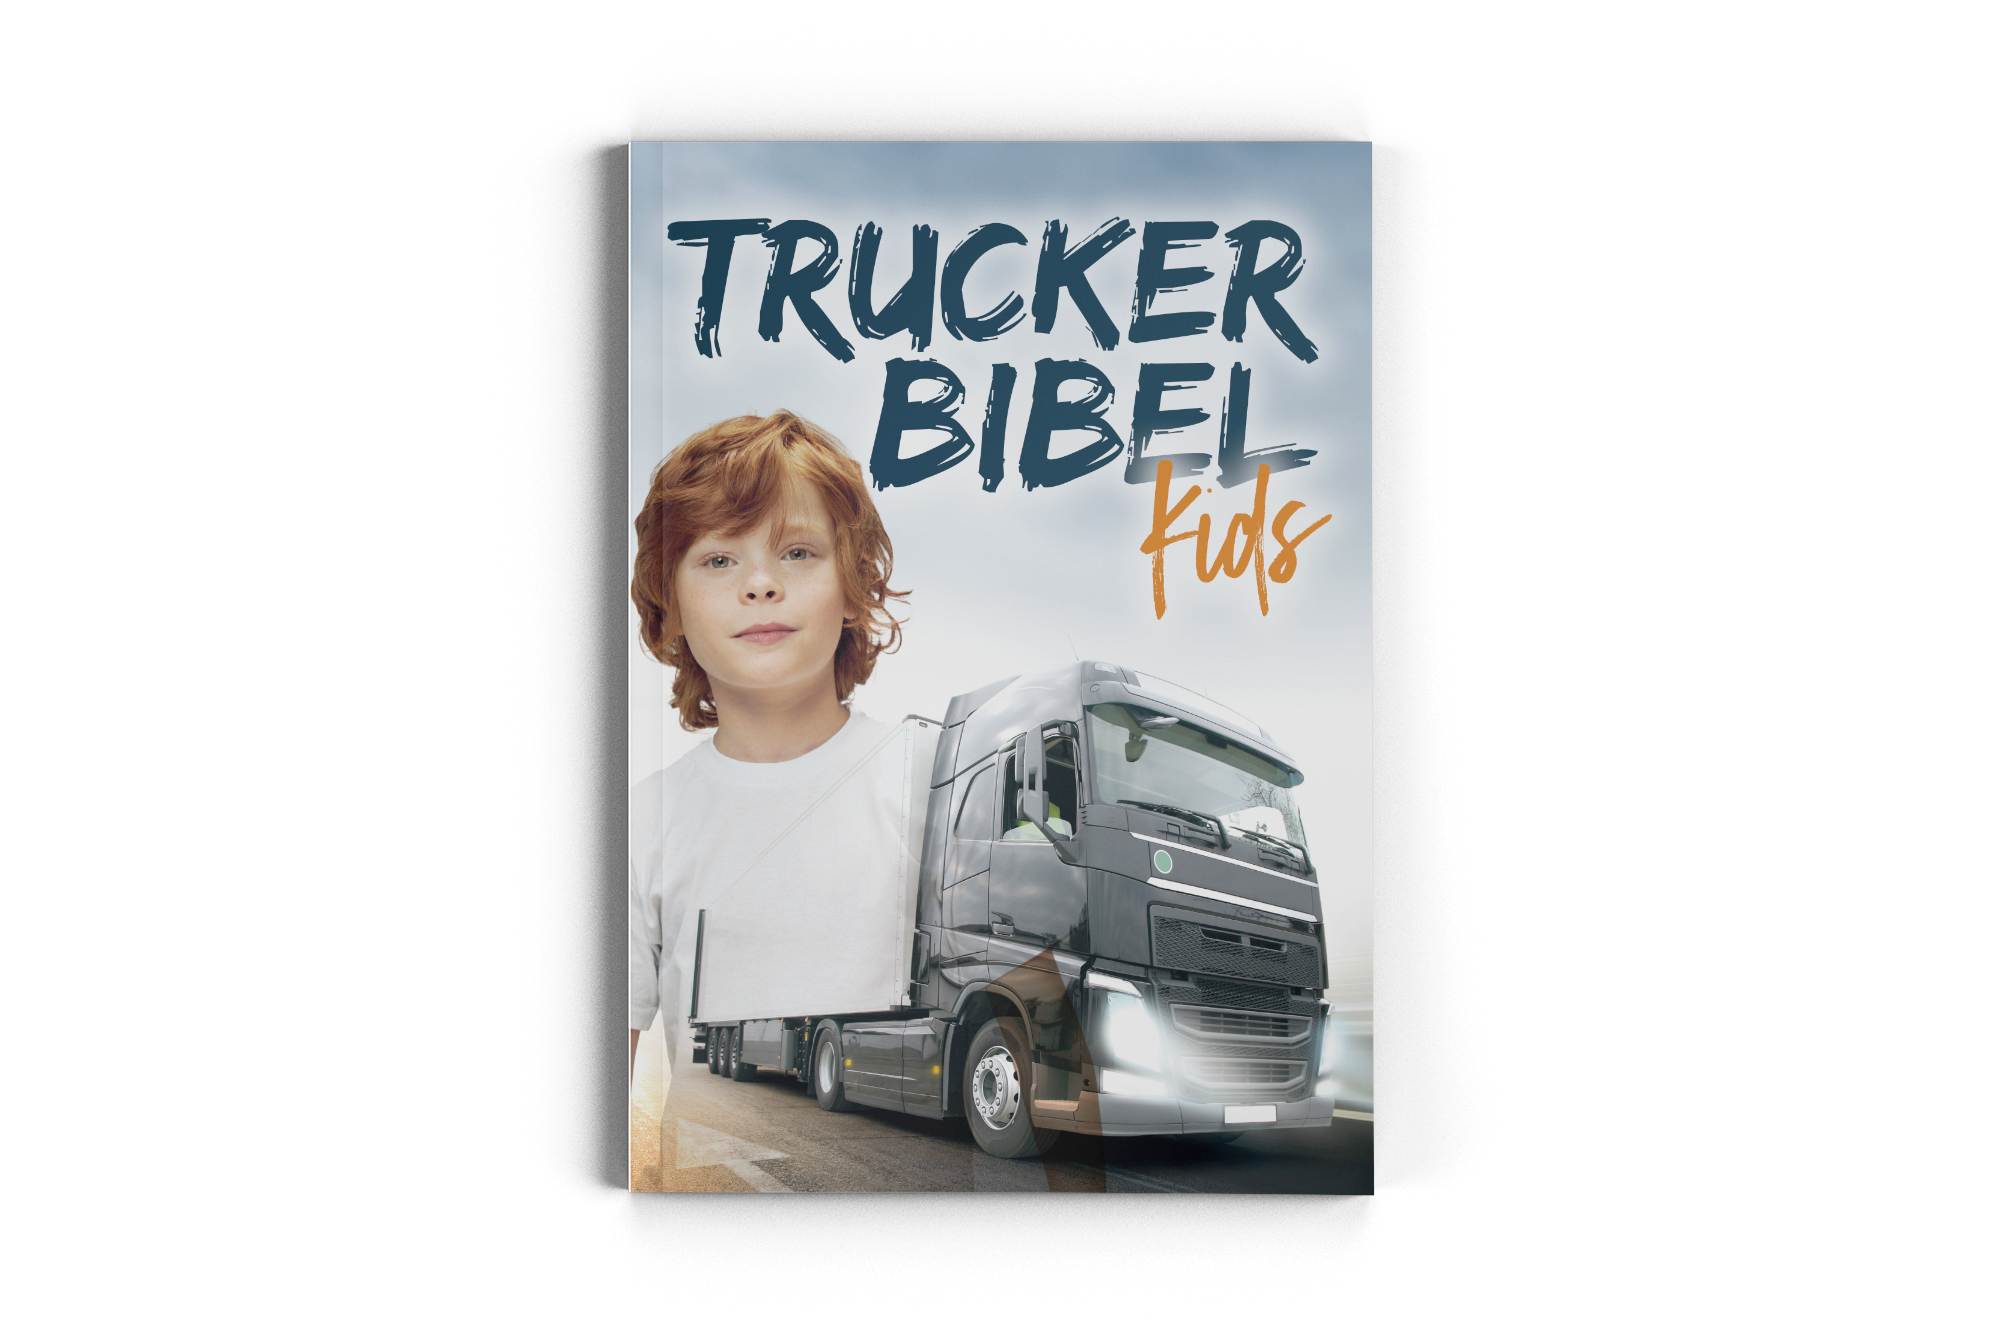 Trucker Bibel Kids